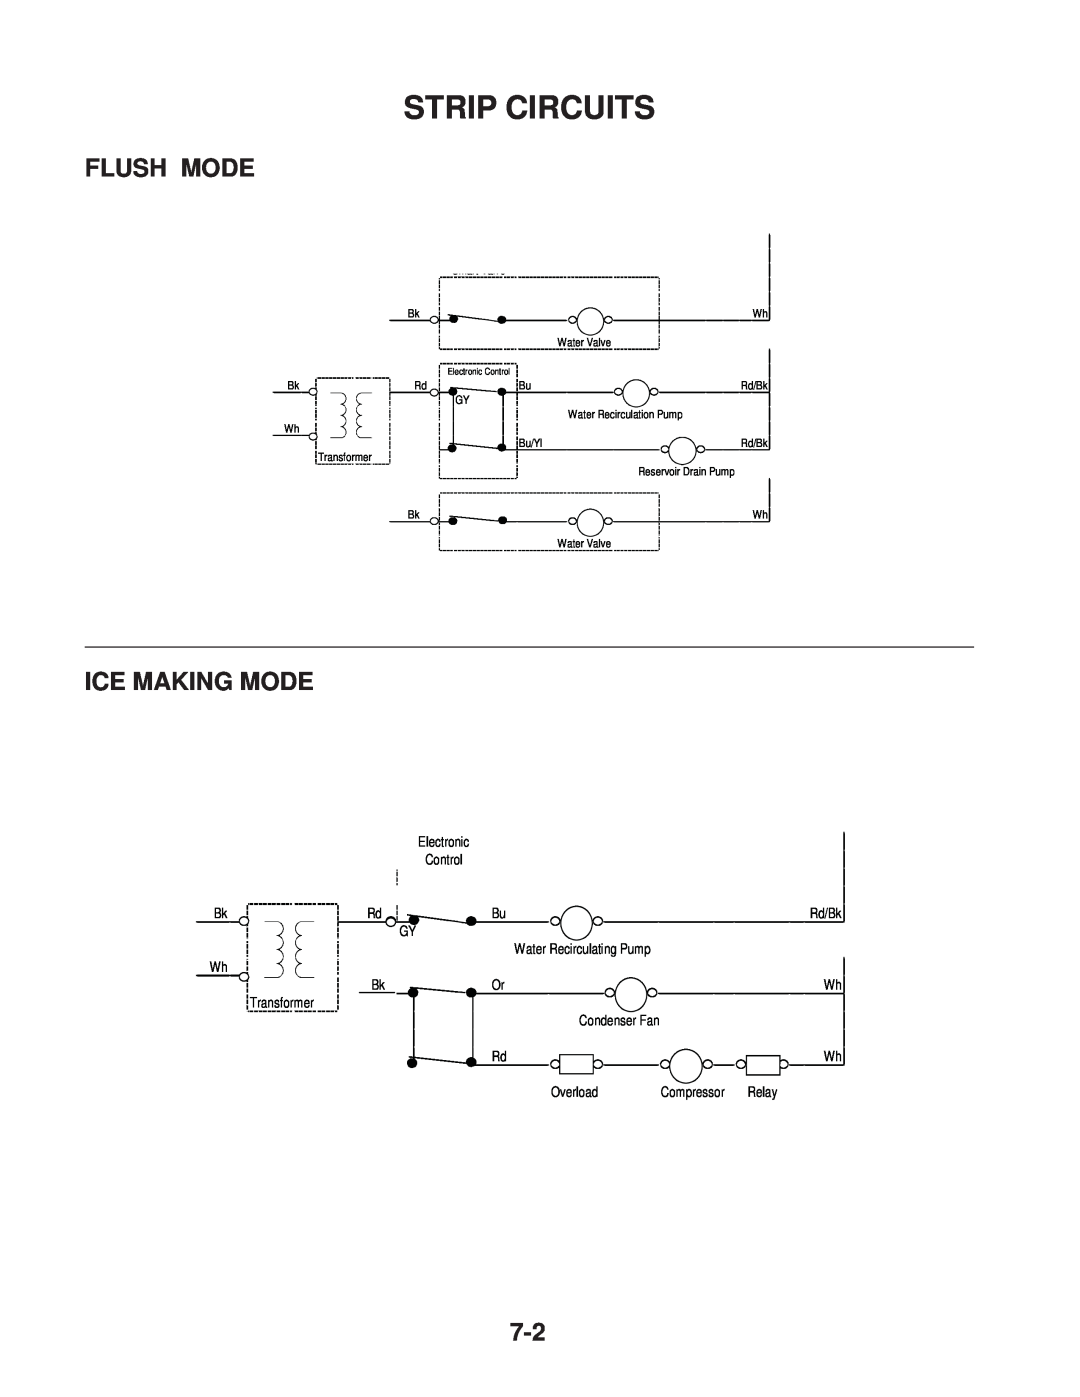 Whirlpool KUIA15PRL*11, KUIA18NNJ*11, KUIA15NRH*11, KUIA15NLH*11, KUIA18PNL*11 Strip Circuits, Flush Mode, Ice Making Mode 